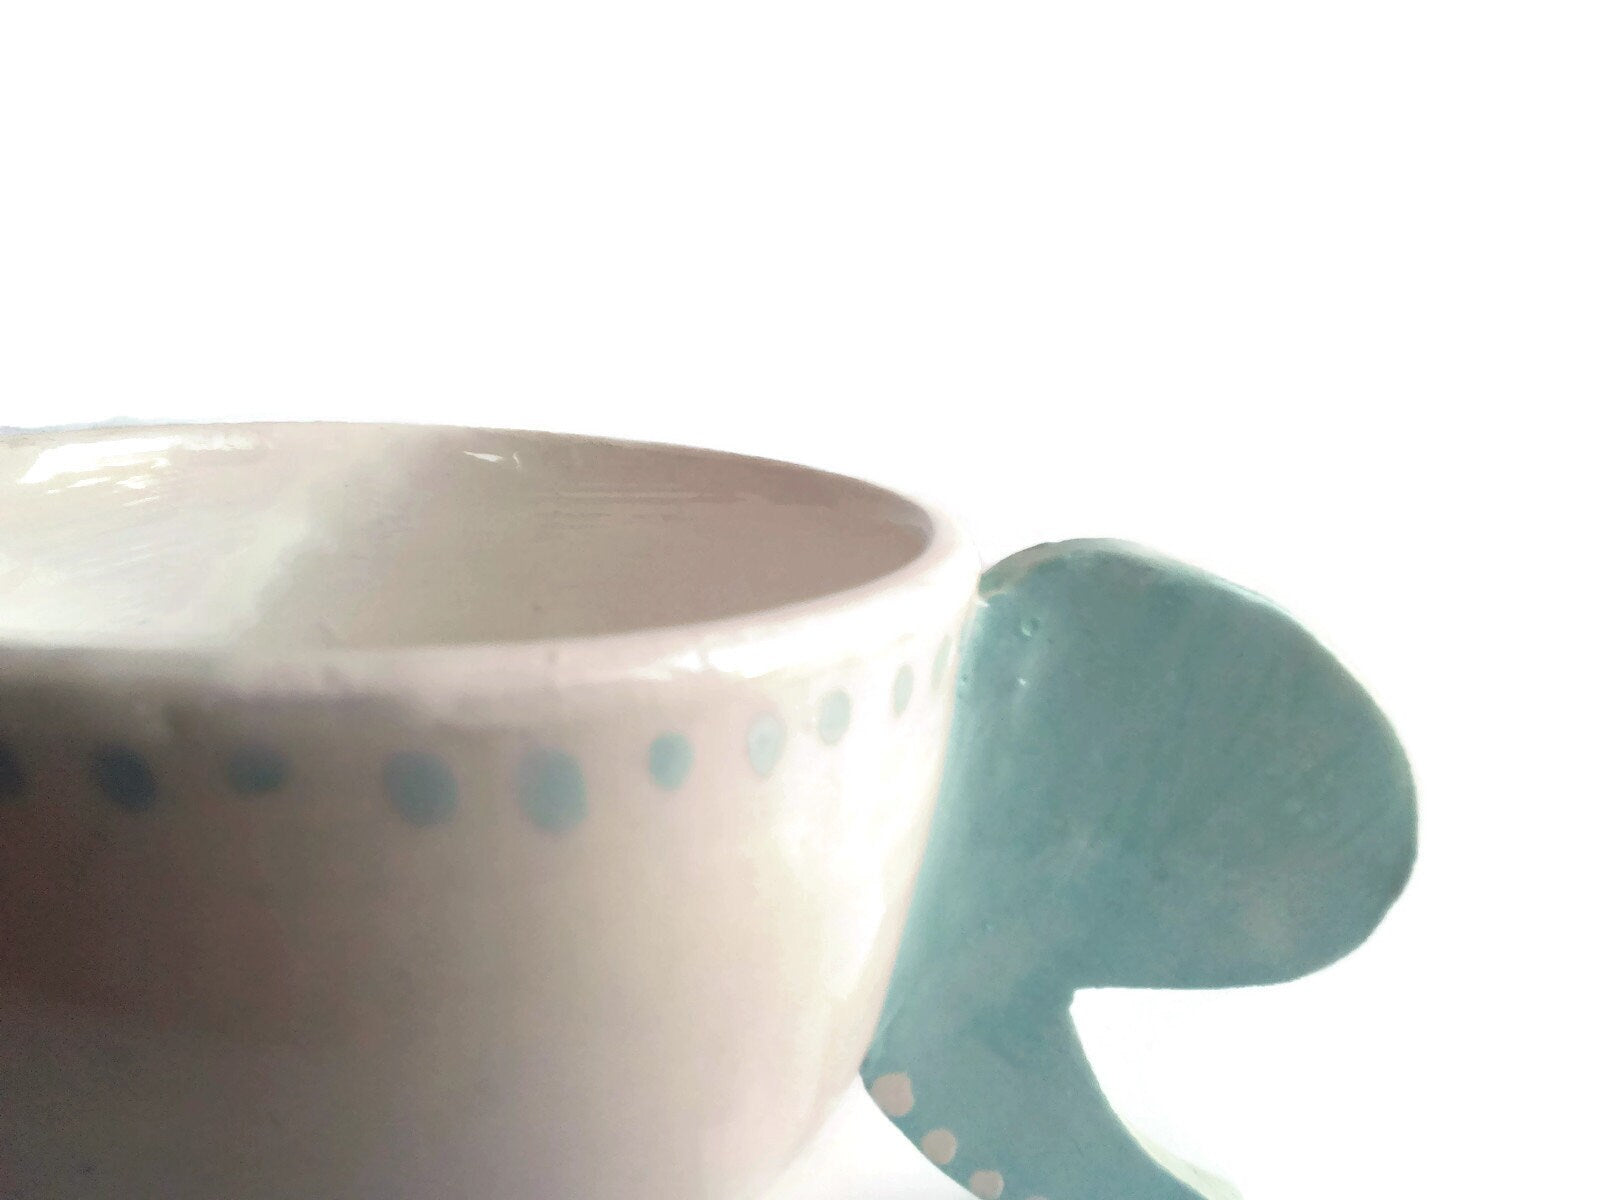 LARGE COFFEE MUG, Best Gifts For Her, Handmade Ceramic Funny Mugs For Women, Novelty Hot Chocolate Mug - Ceramica Ana Rafael